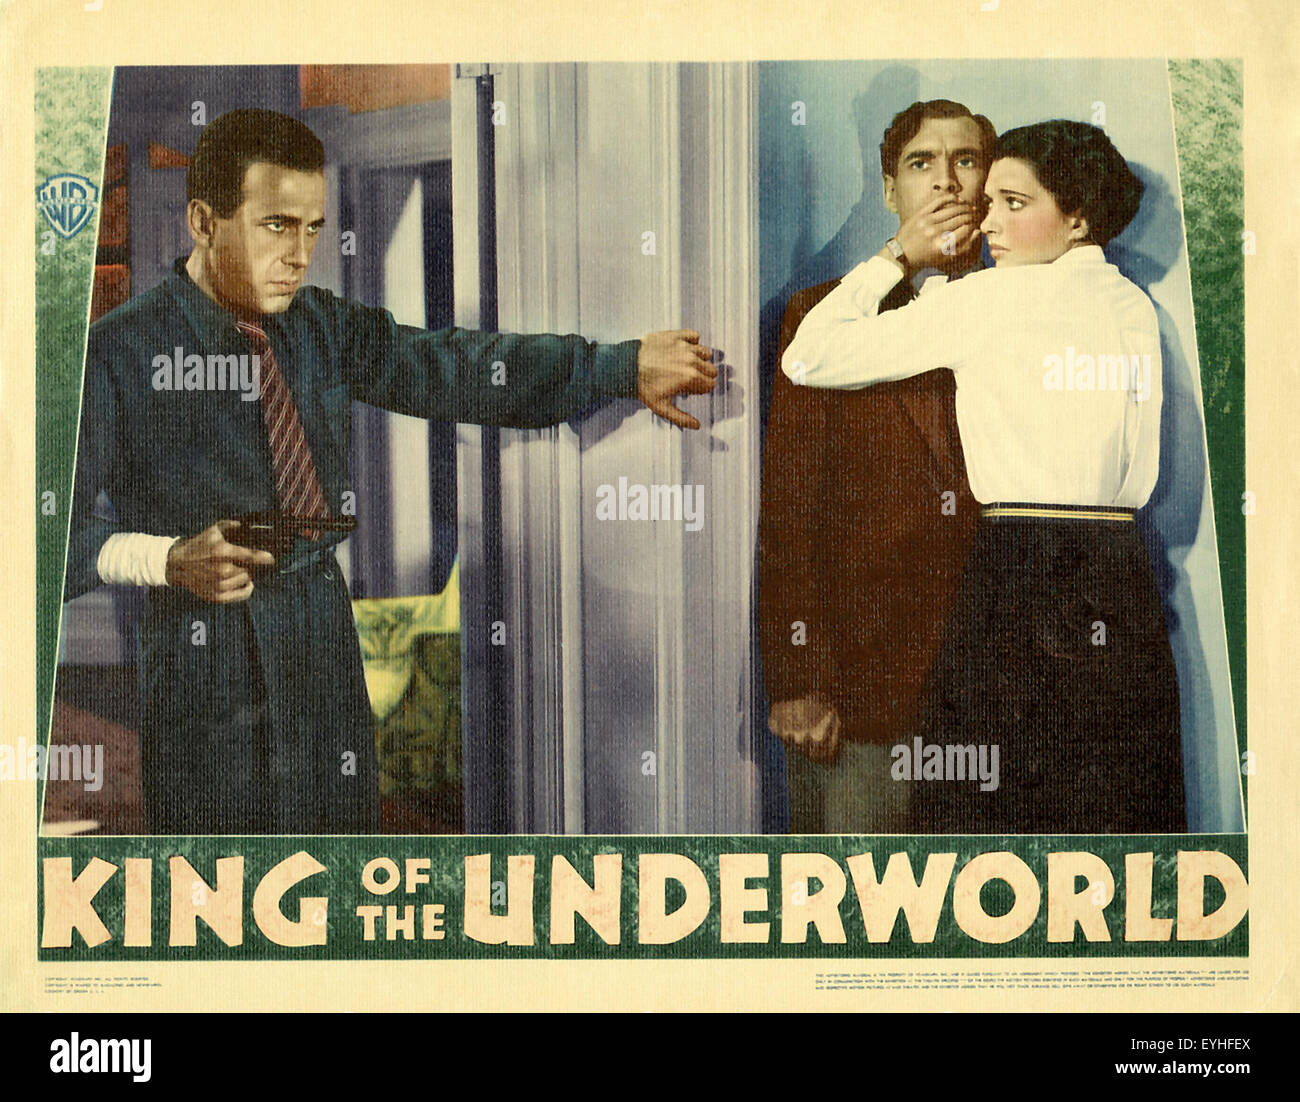 King of the Underworld - Humphrey Bogart - Movie Poster Stock Photo